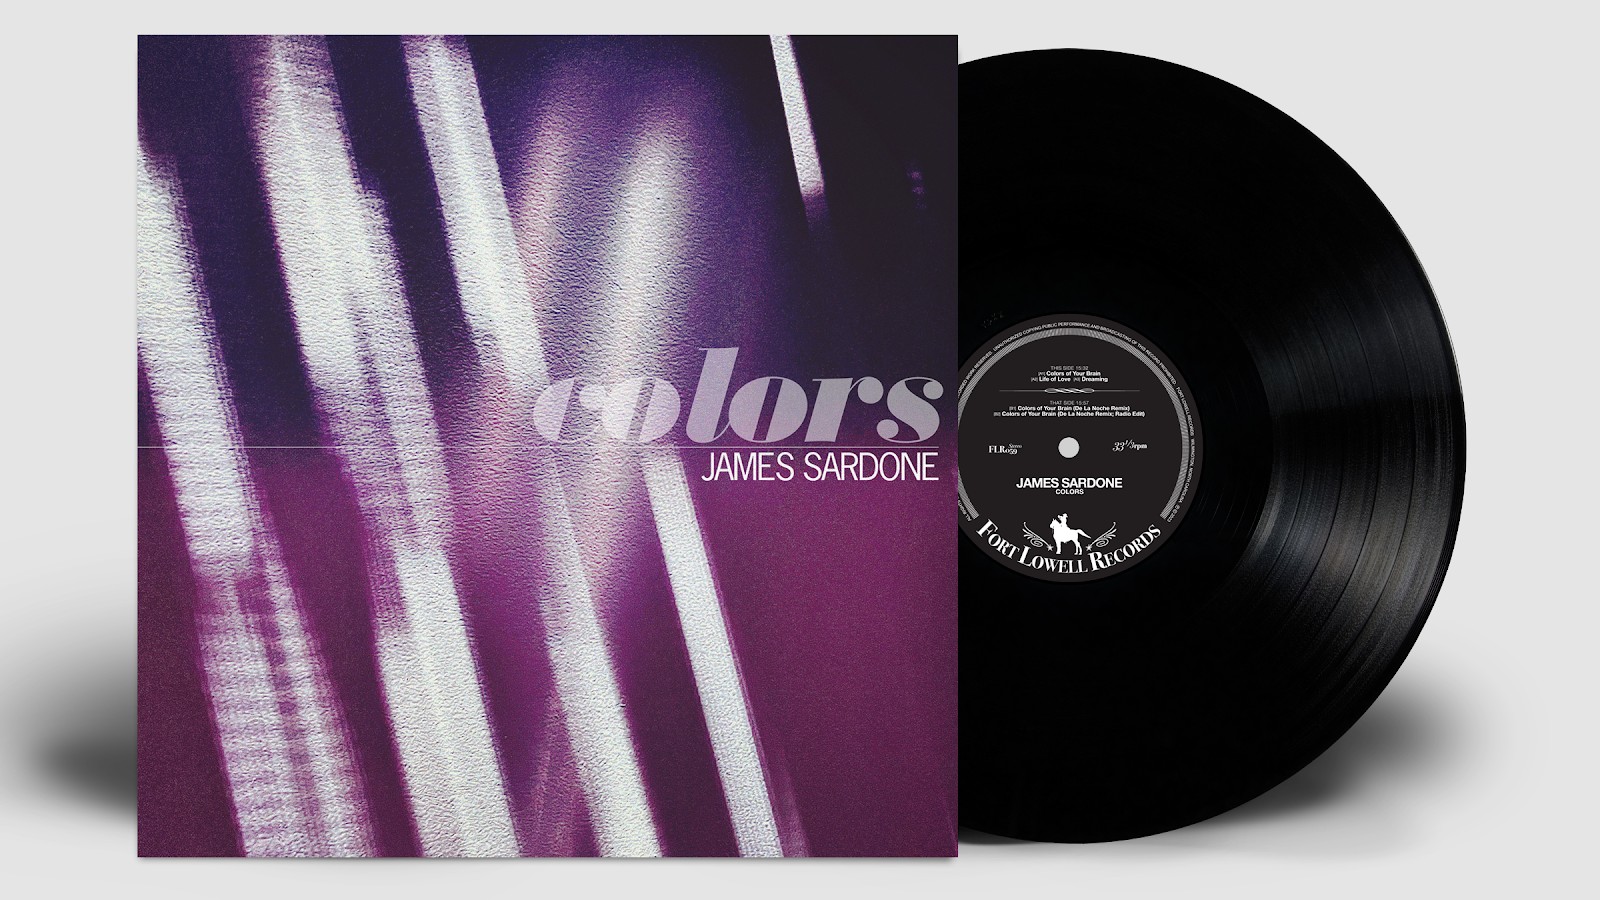 James Sardone ‘Colors’ vinyl album artwork